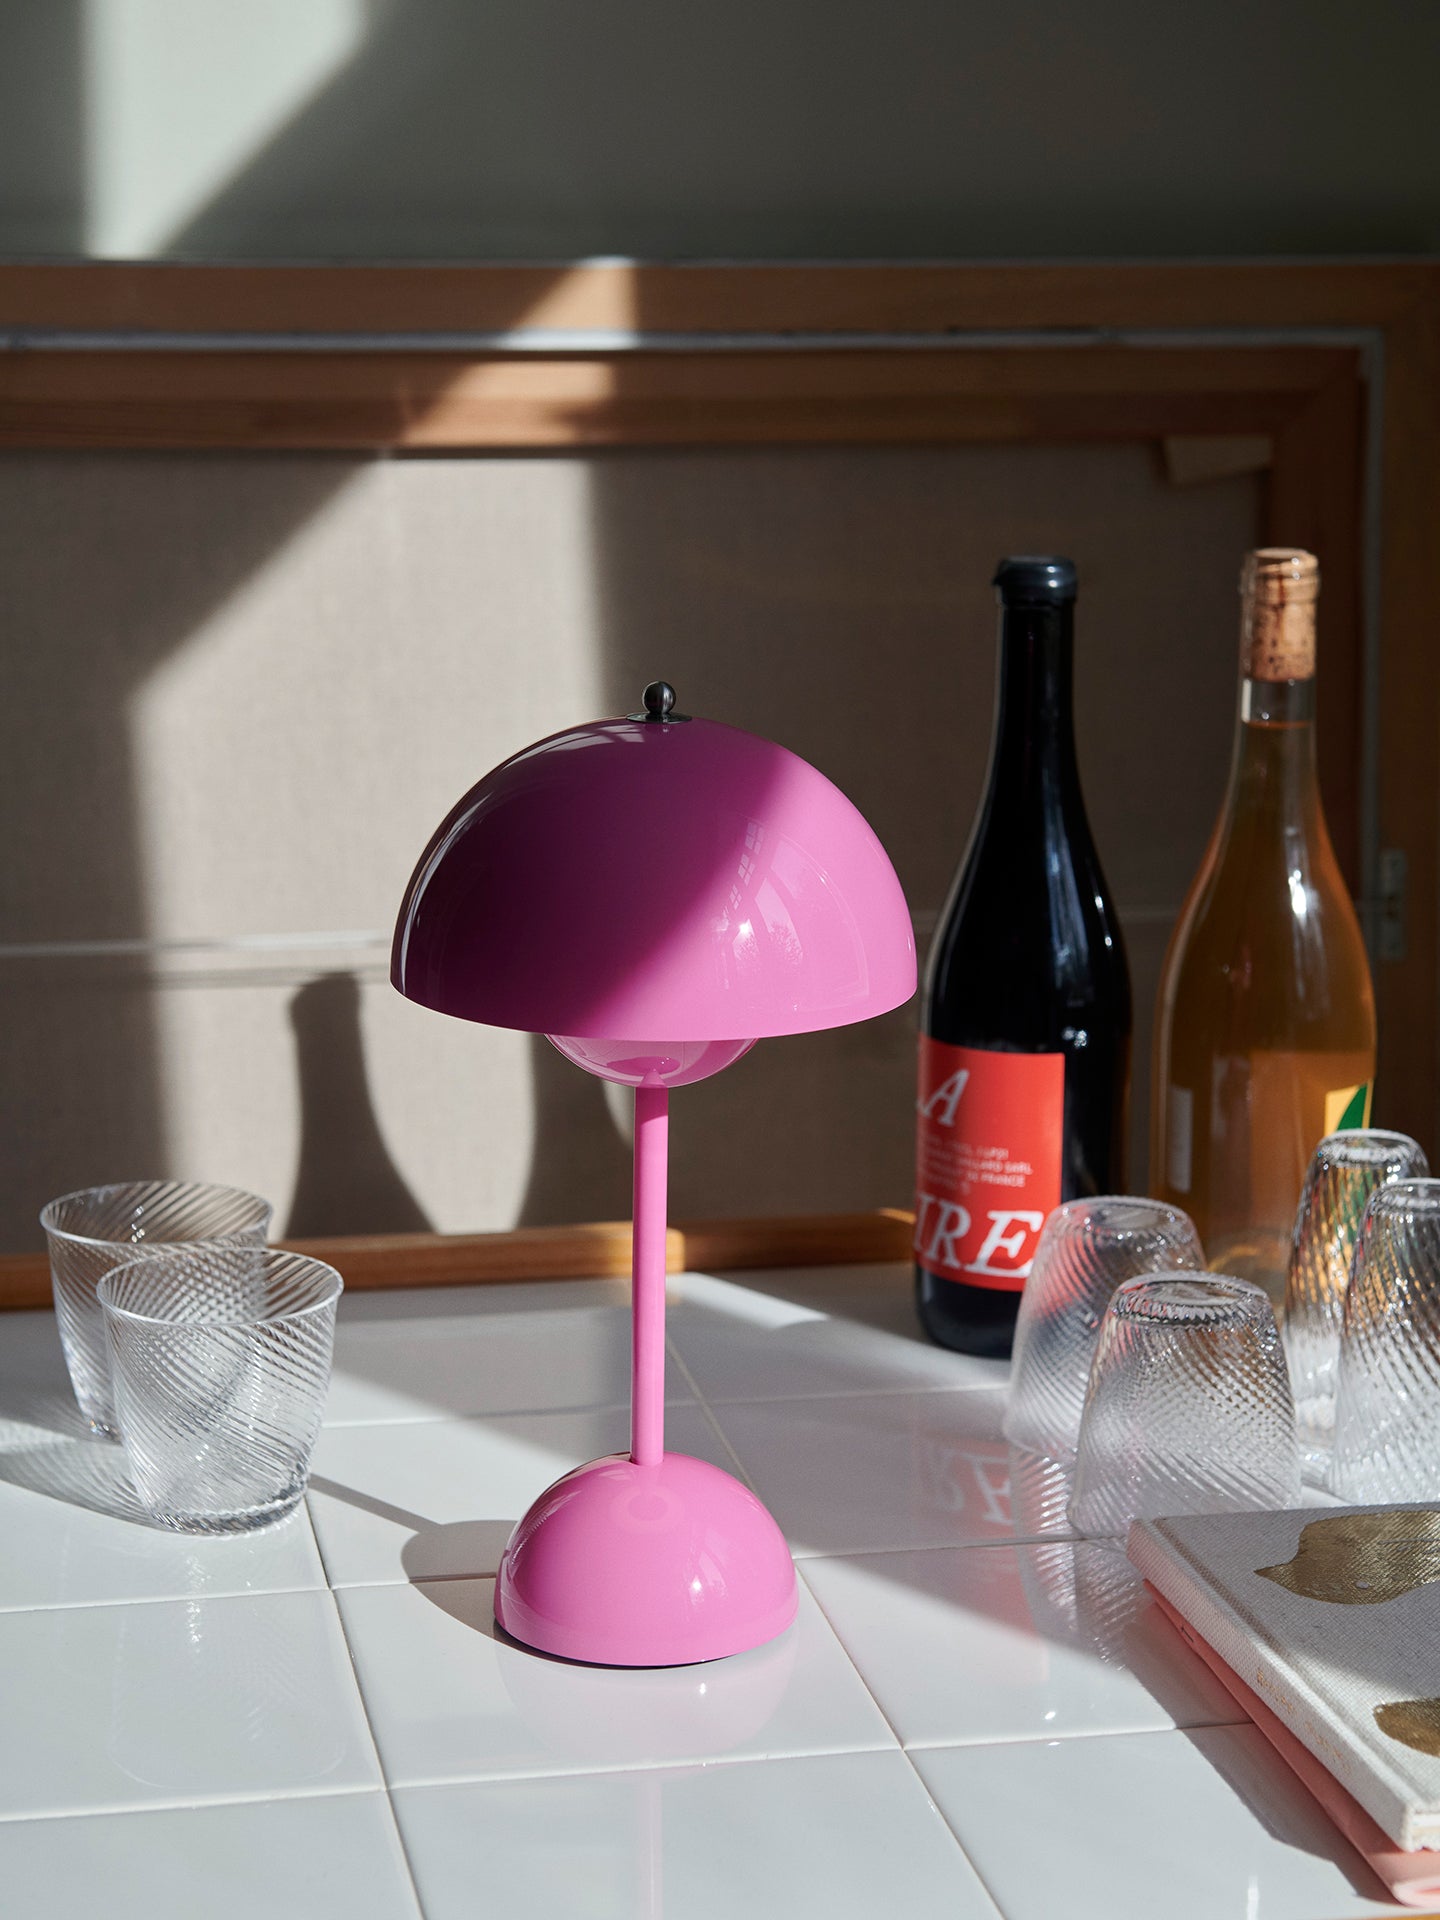 Flowerpot Portable Lamp VP9, Tangy Pink